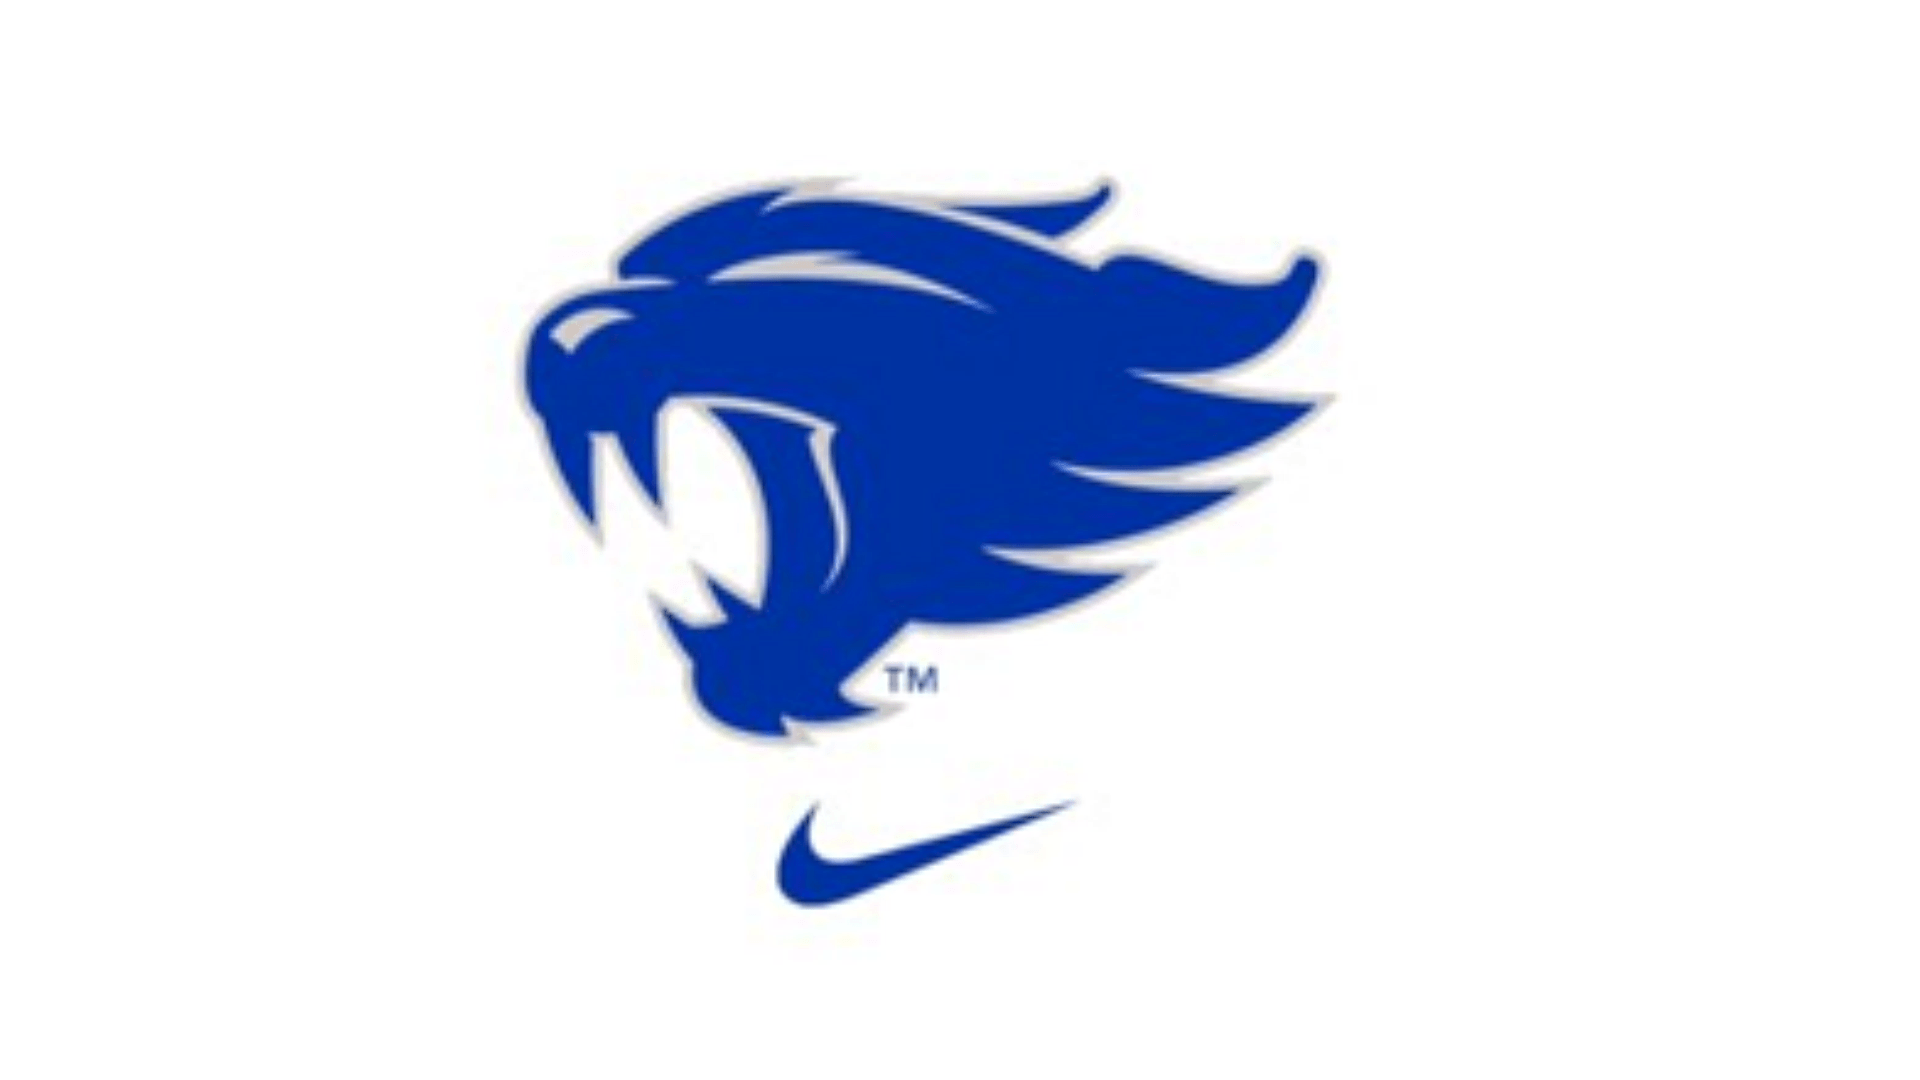 Wildcats Logo - Kentucky makes waves with new Wildcat logo | Sporting News